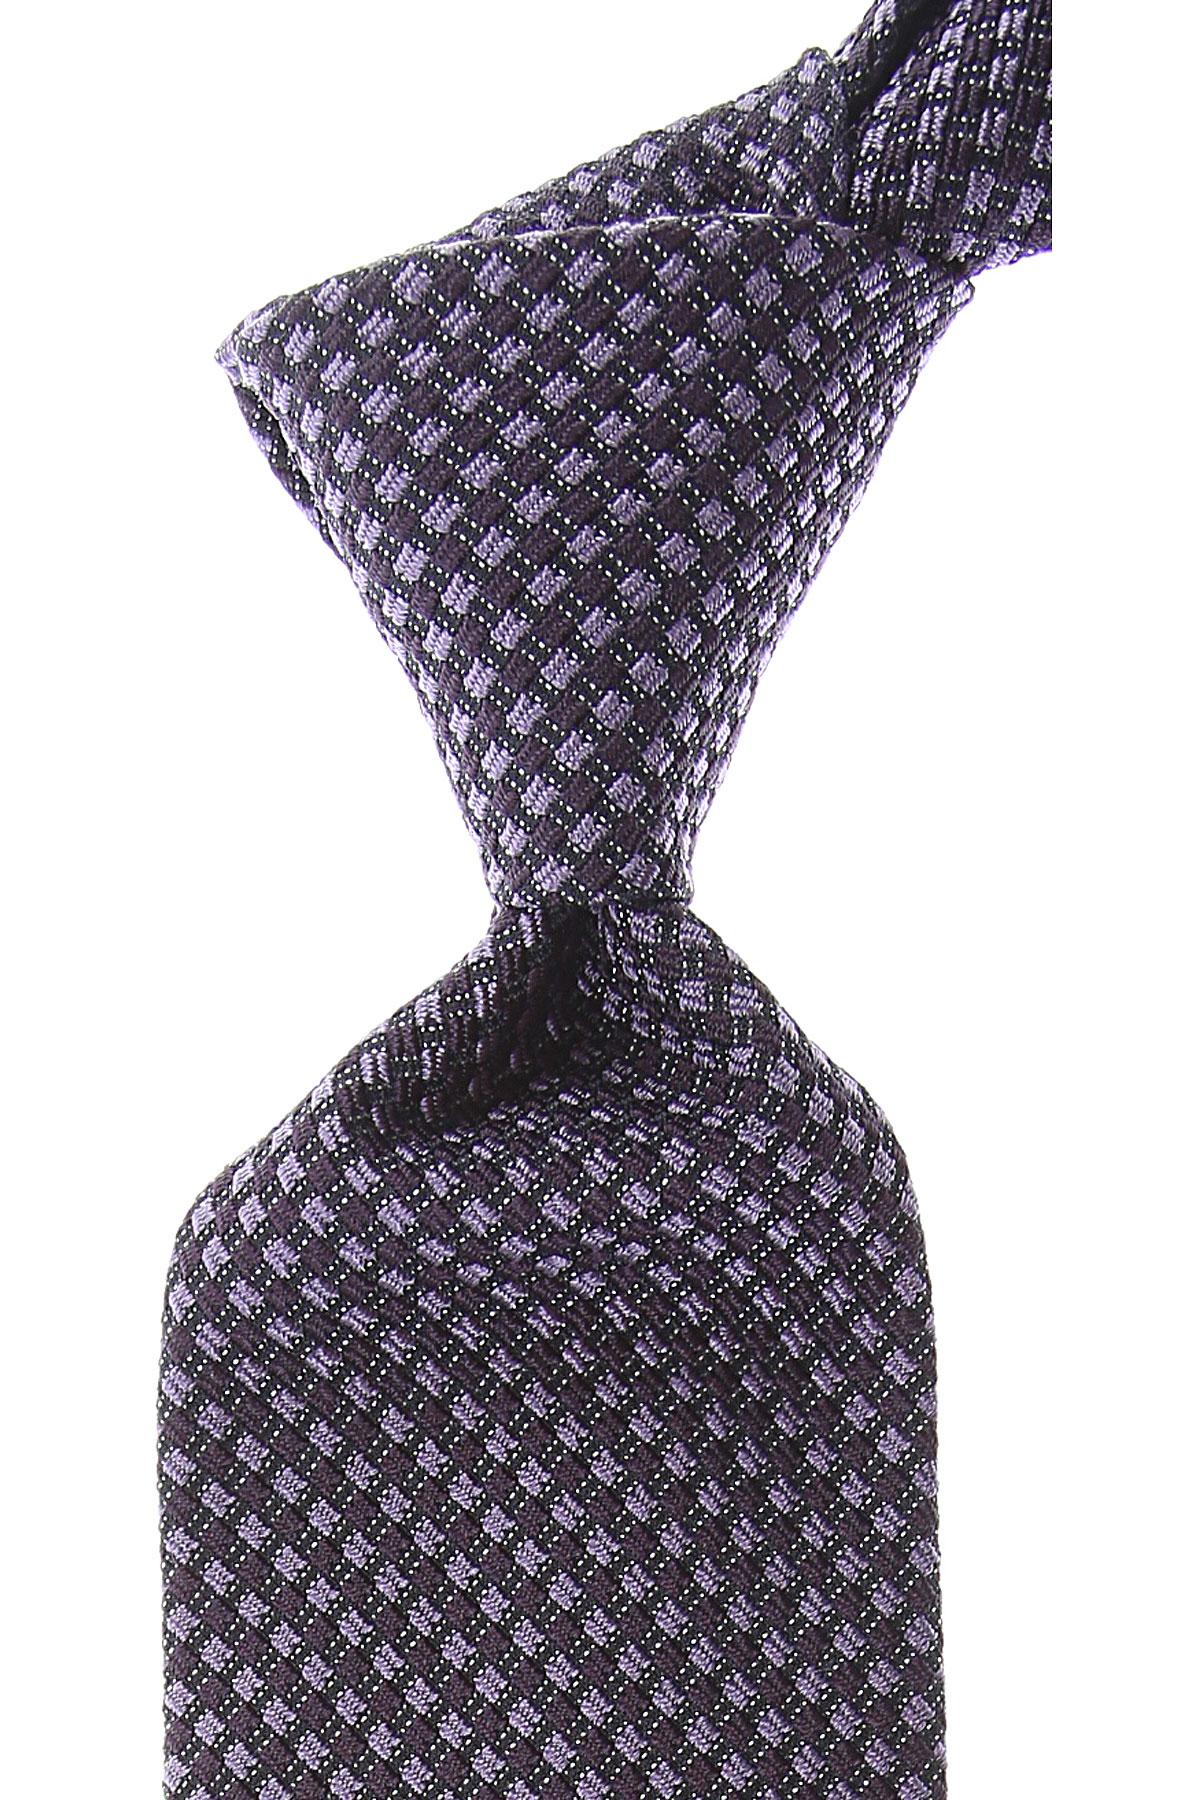 Tom Ford Silk Ties On Sale in Violet (Purple) for Men - Lyst